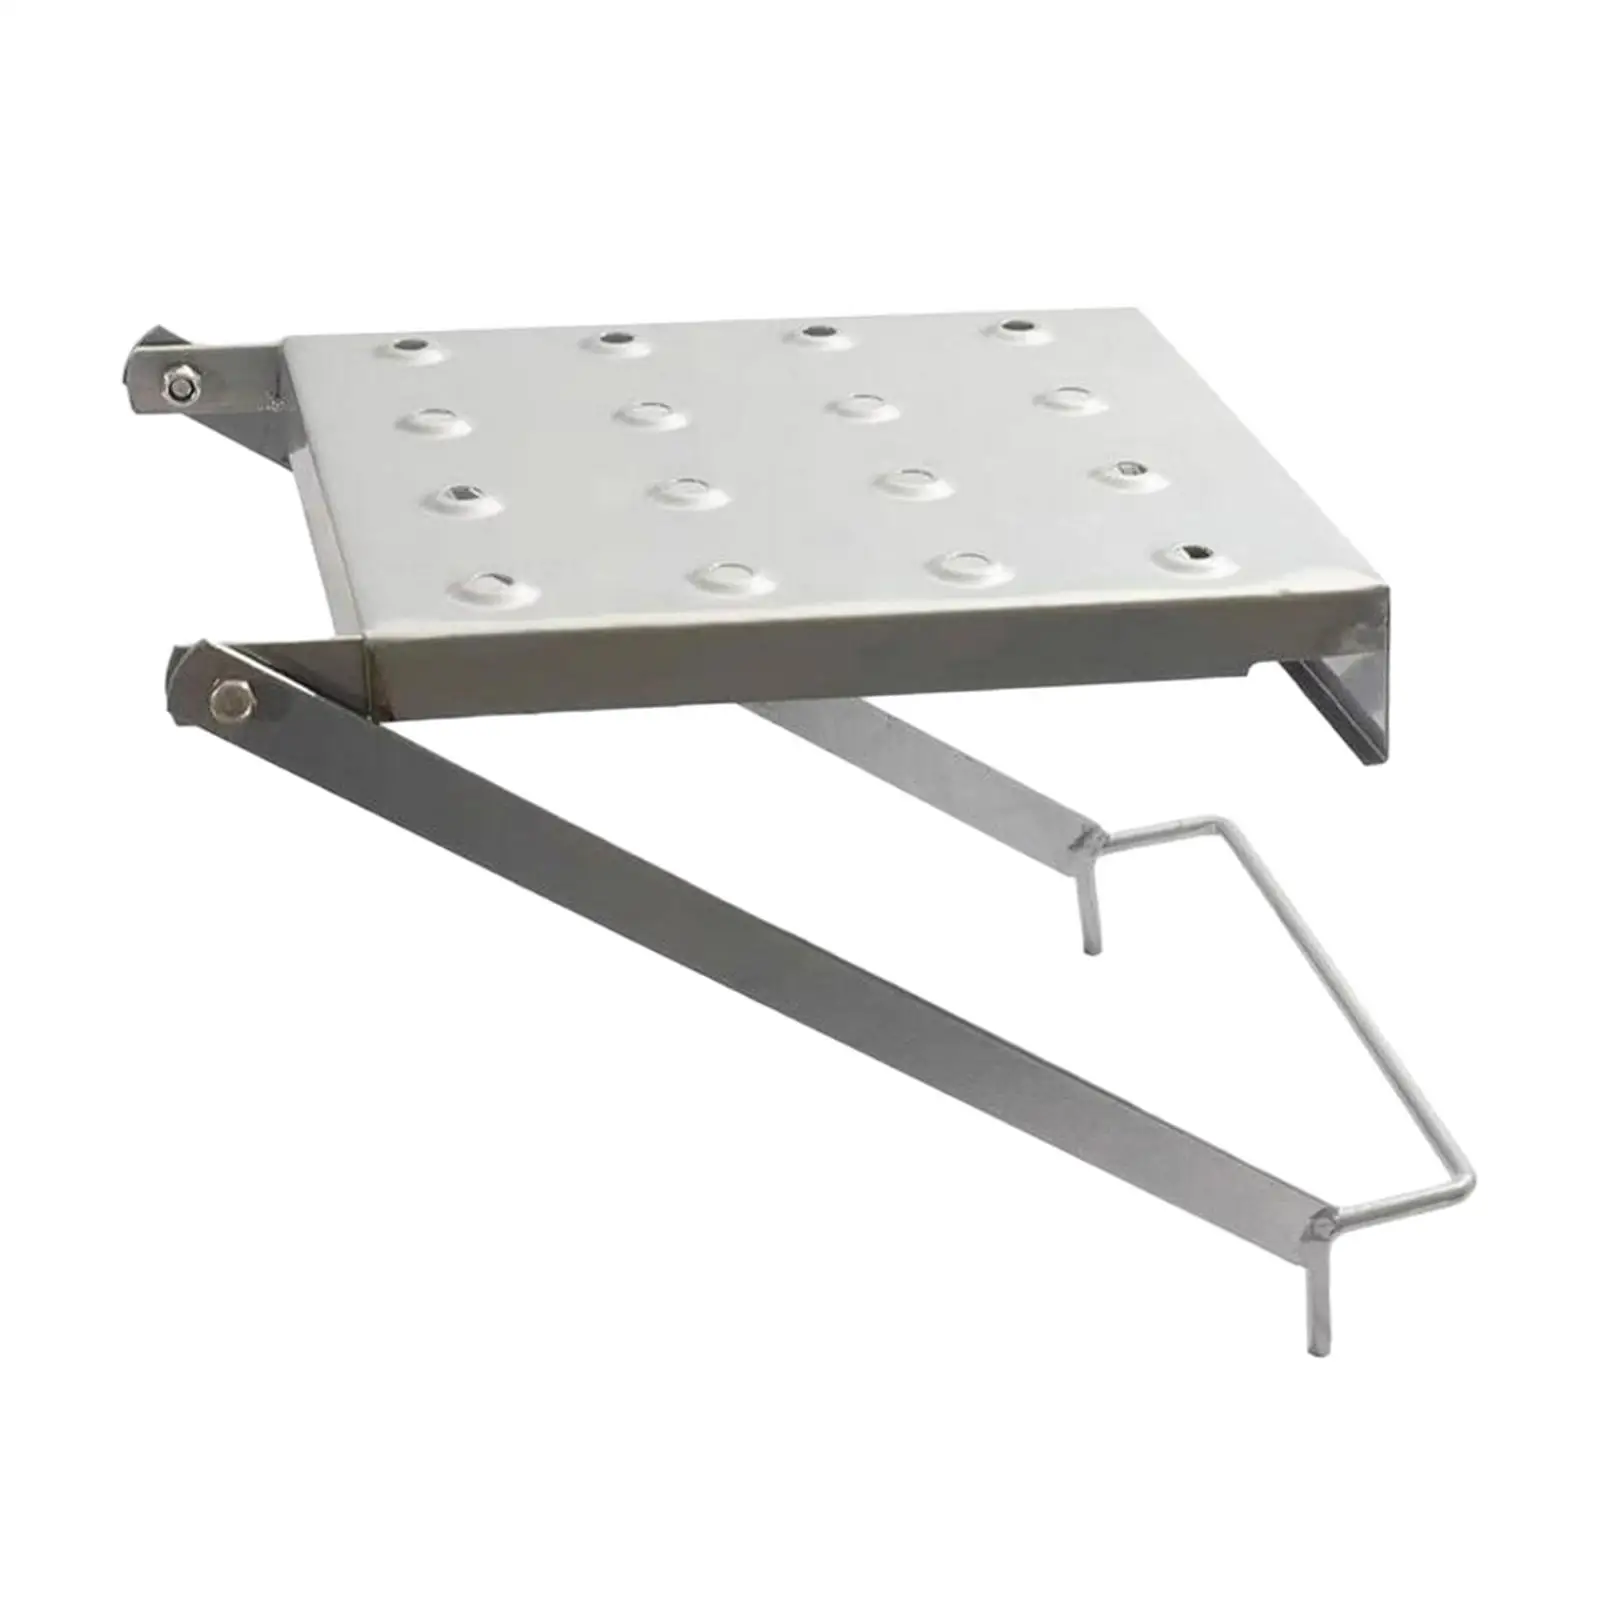 Ladder Work Platform Work Ladder Tray Storage Platform Practical Stable Multipurpose for Office Kitchen Working Pantry Indoor